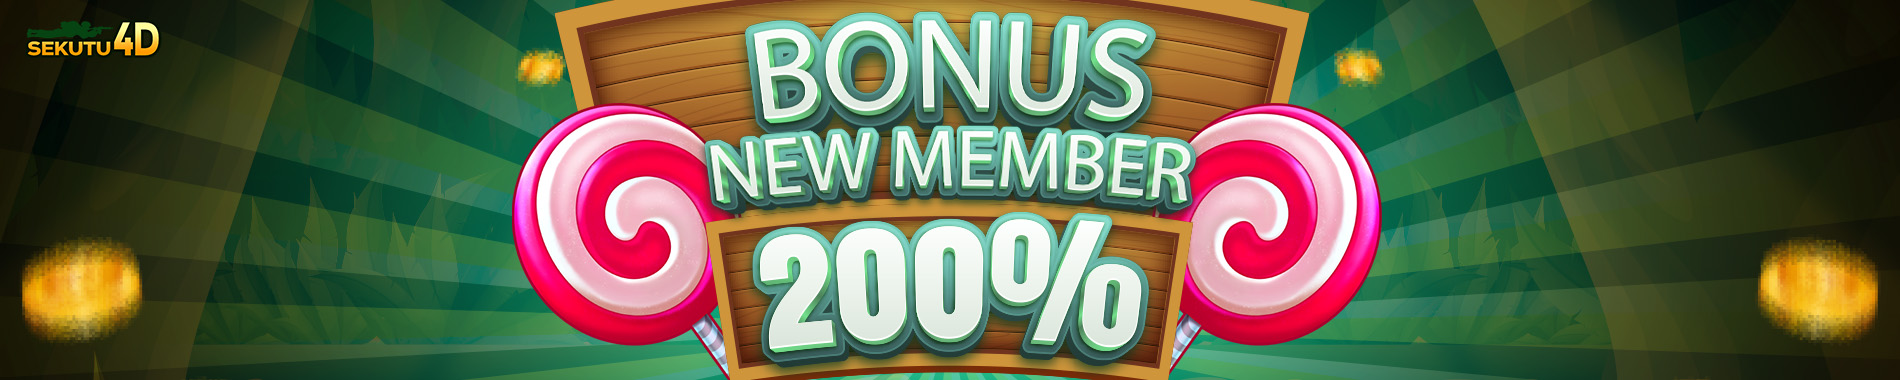 bonus 200%